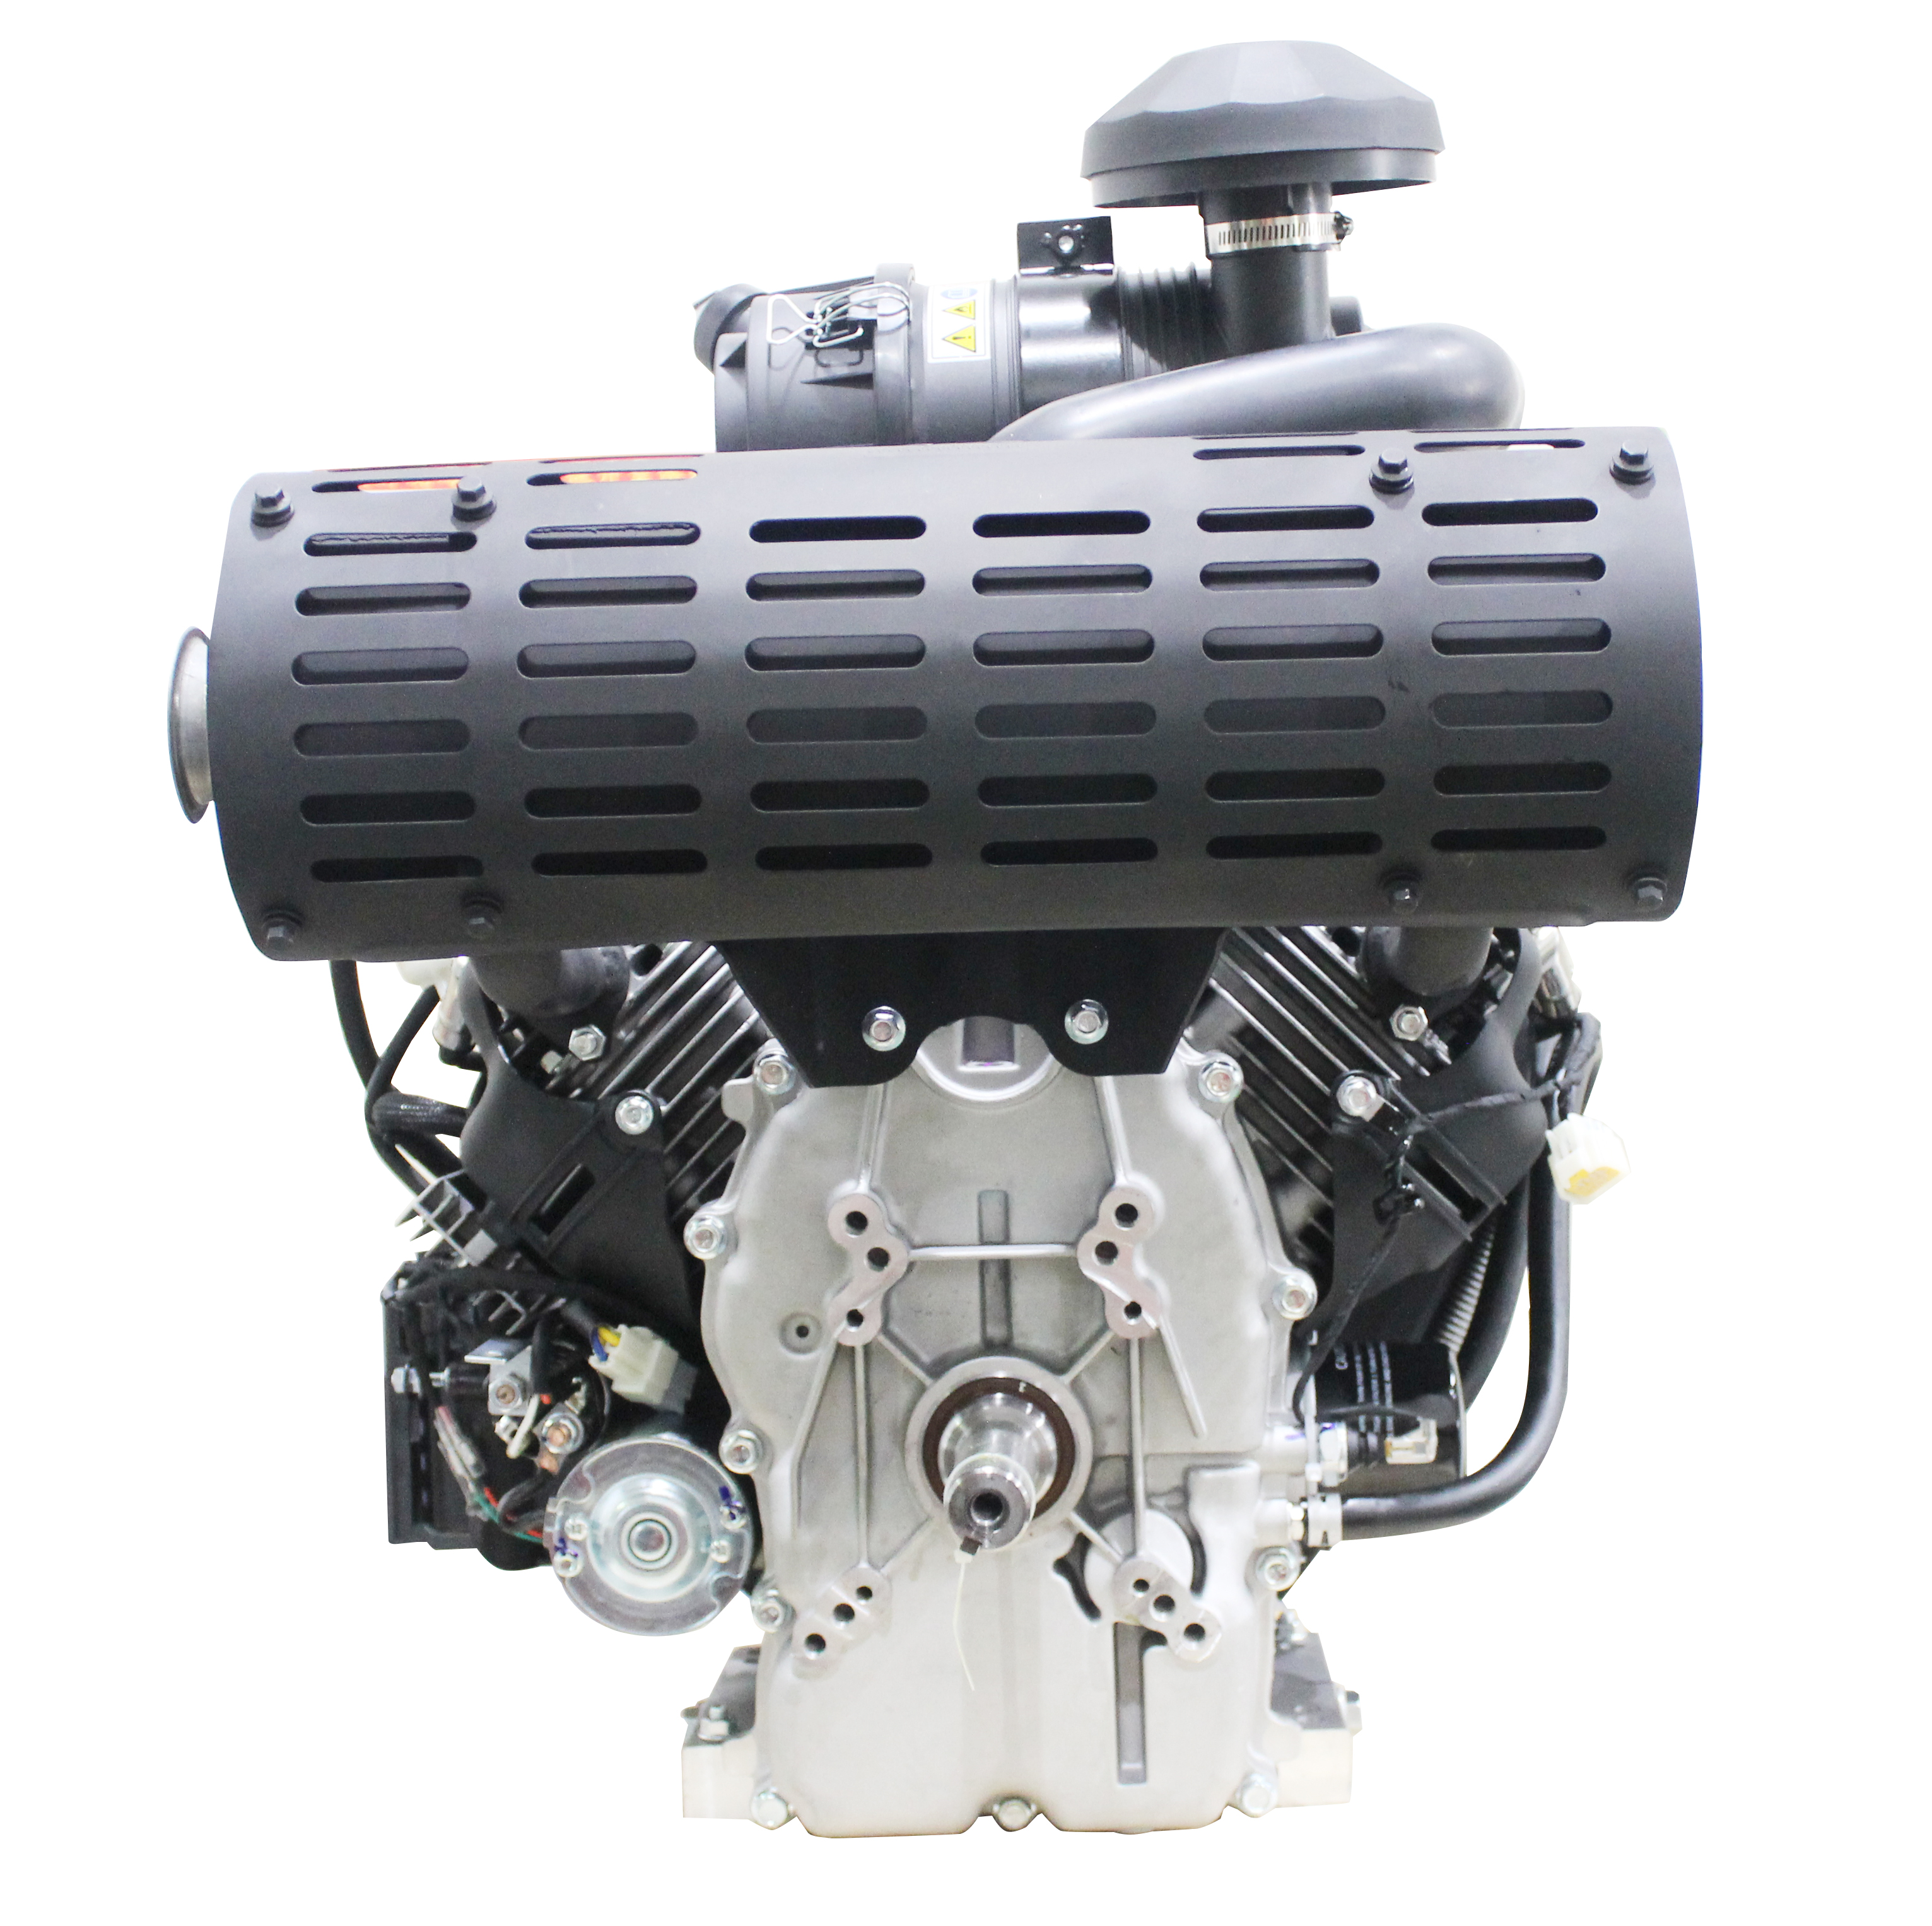 Fullas H1000i 40HP 999CC EFI V Twin Gasoline Engine EPA/EURO-V